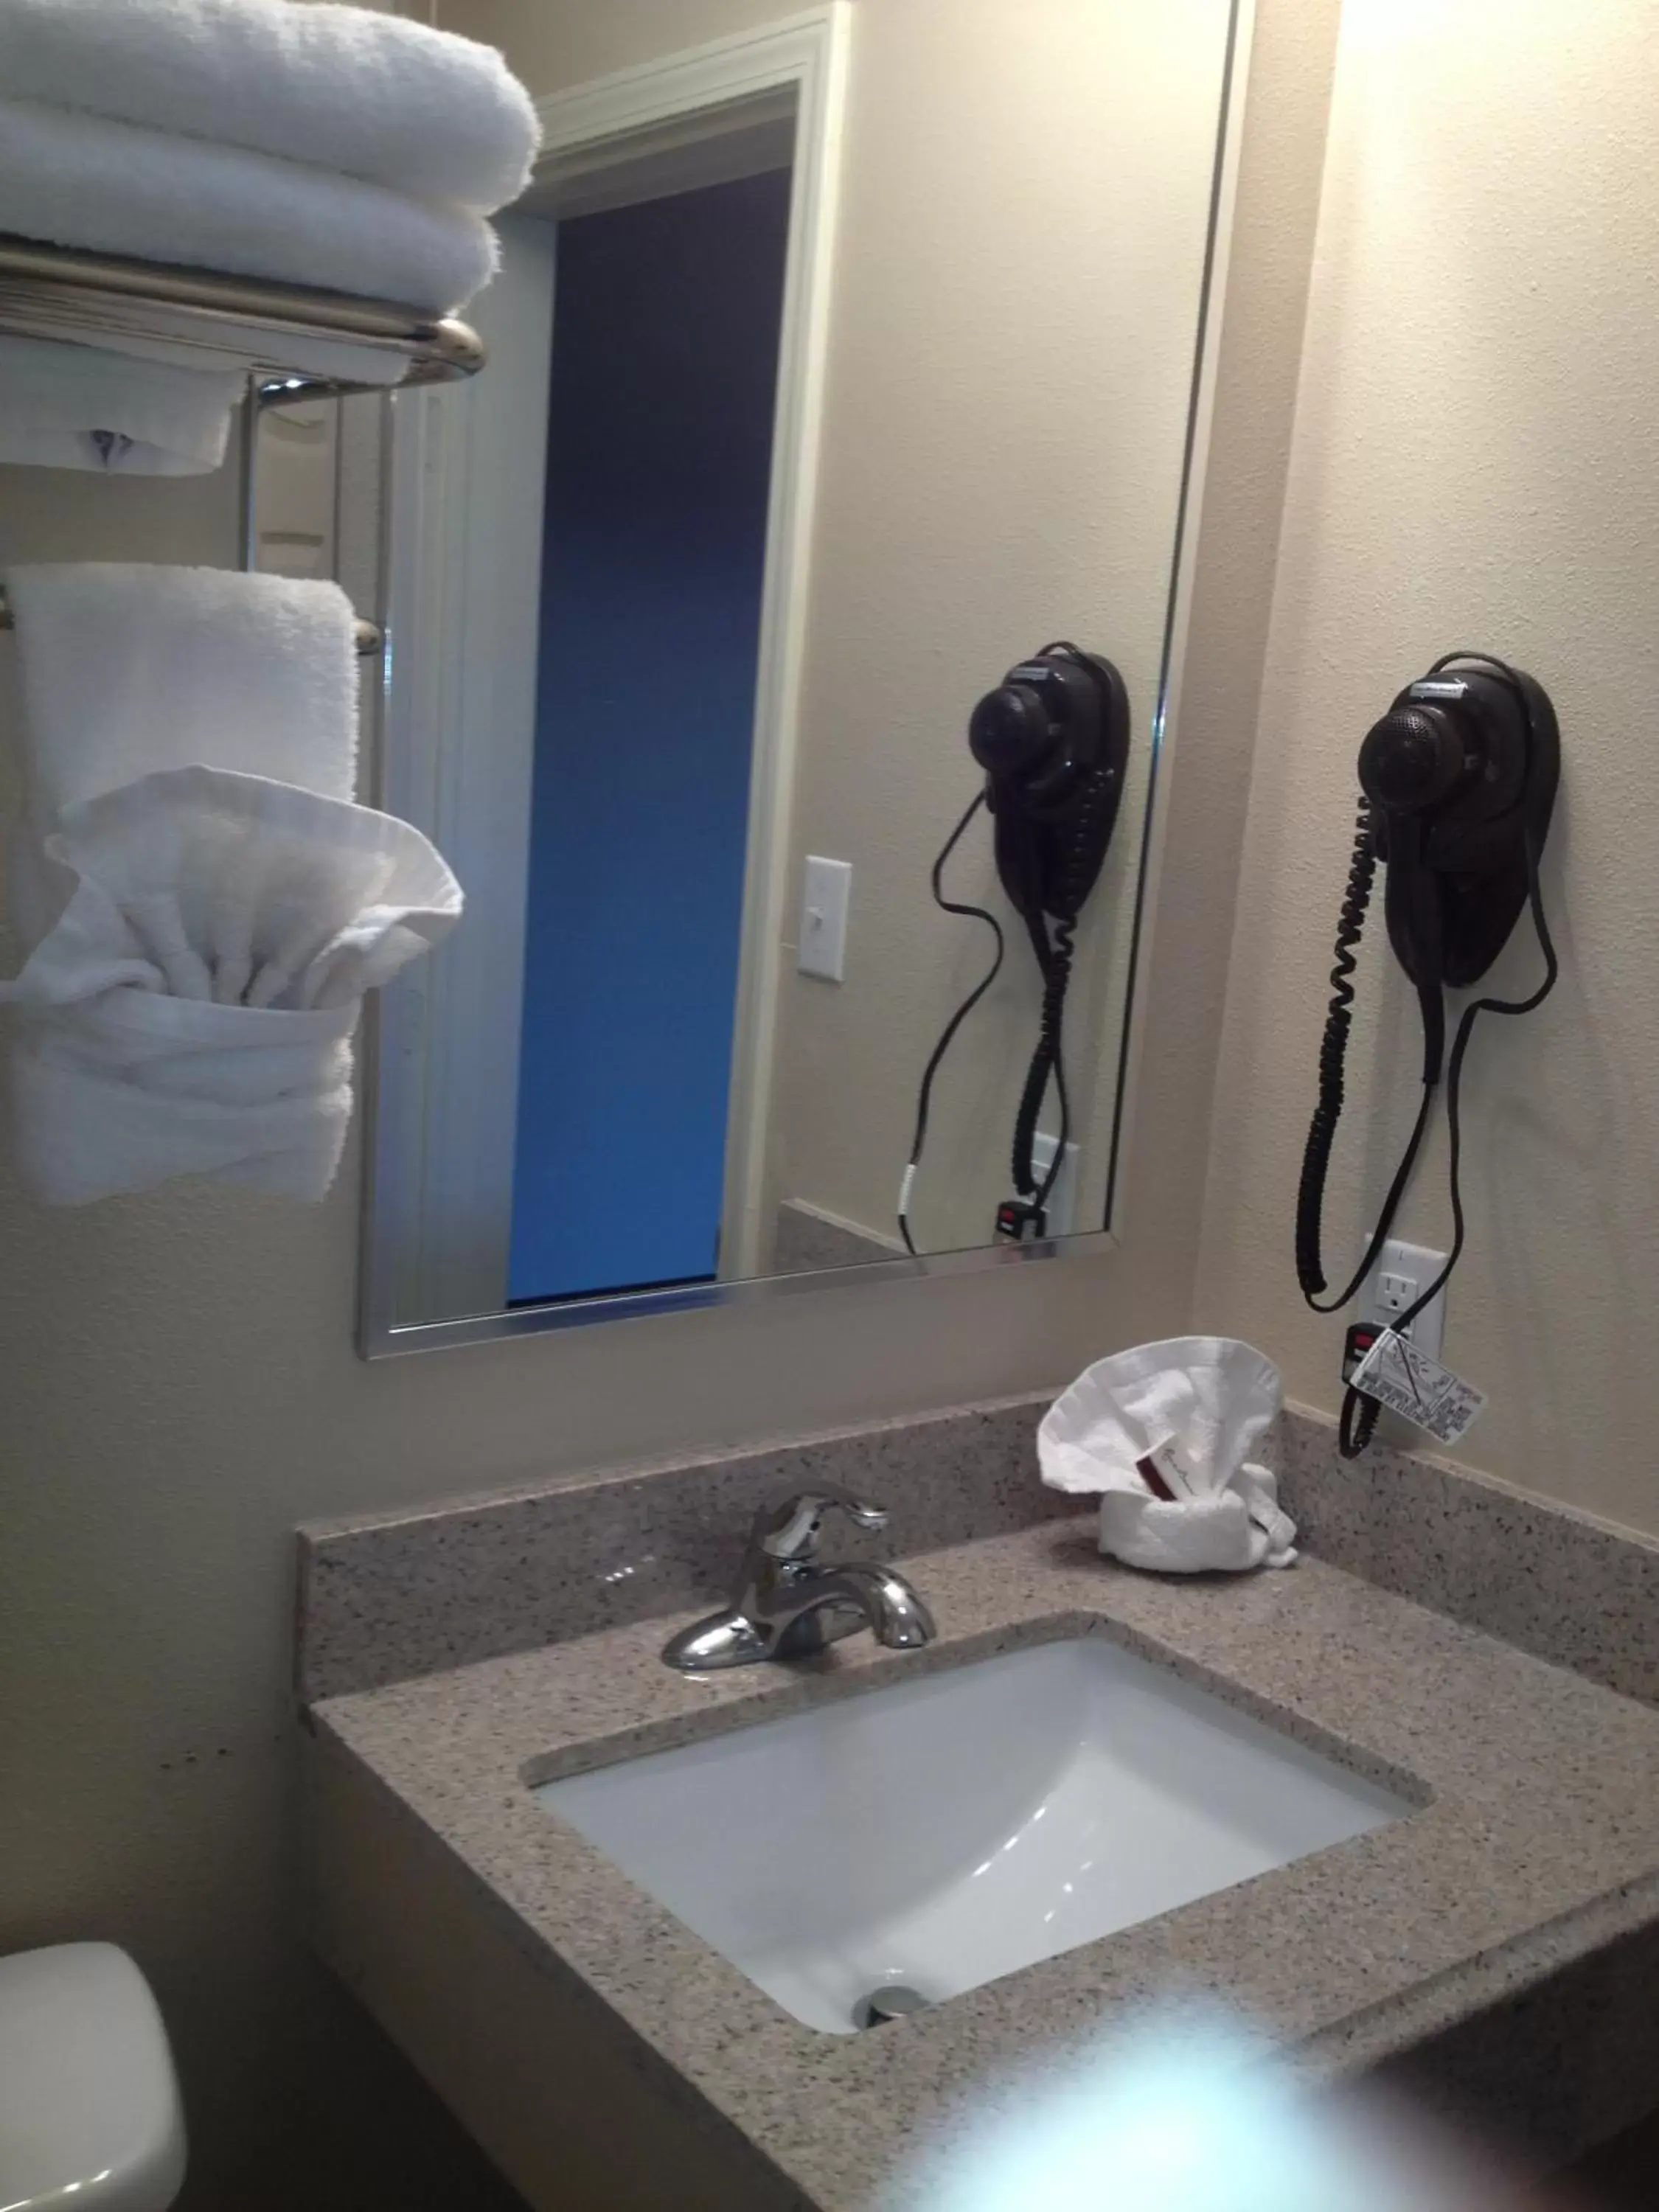 Bathroom in Executive Inn Snyder